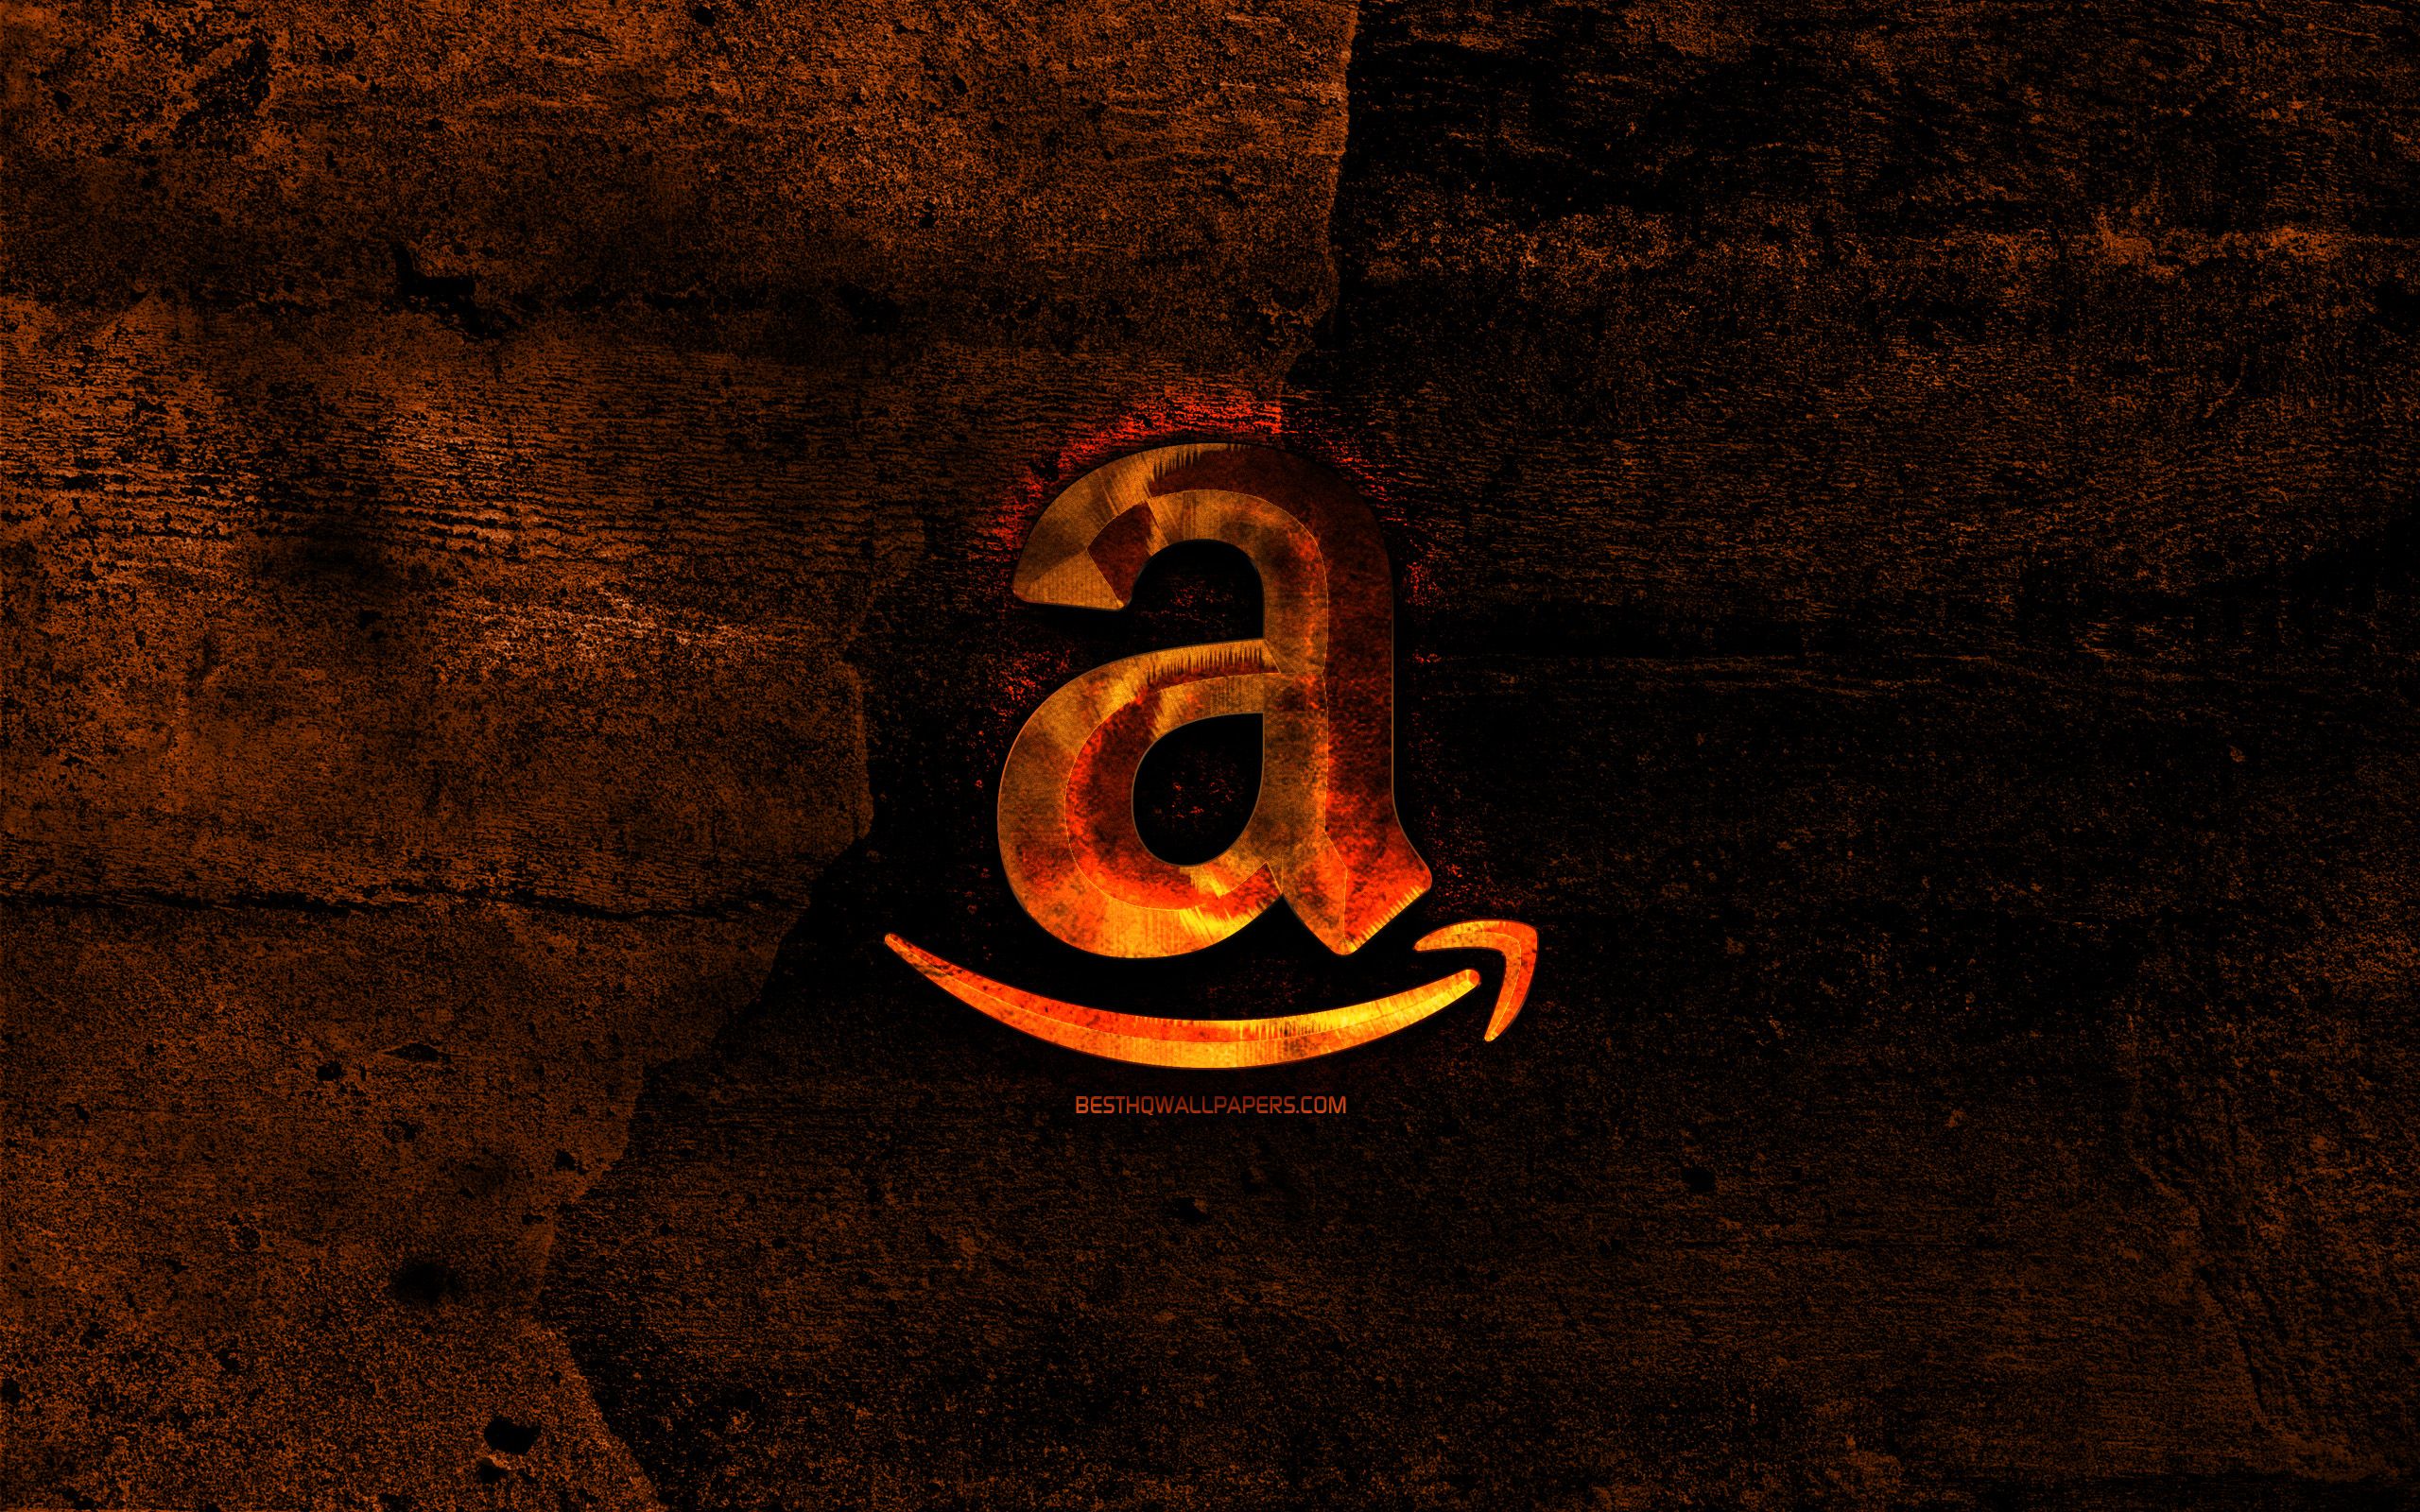  Amazon Hintergrundbild 2560x1600. Download wallpaper Amazon fiery logo, orange stone background, Amazon, creative, Amazon logo, brands for desktop with resolution 2560x1600. High Quality HD picture wallpaper